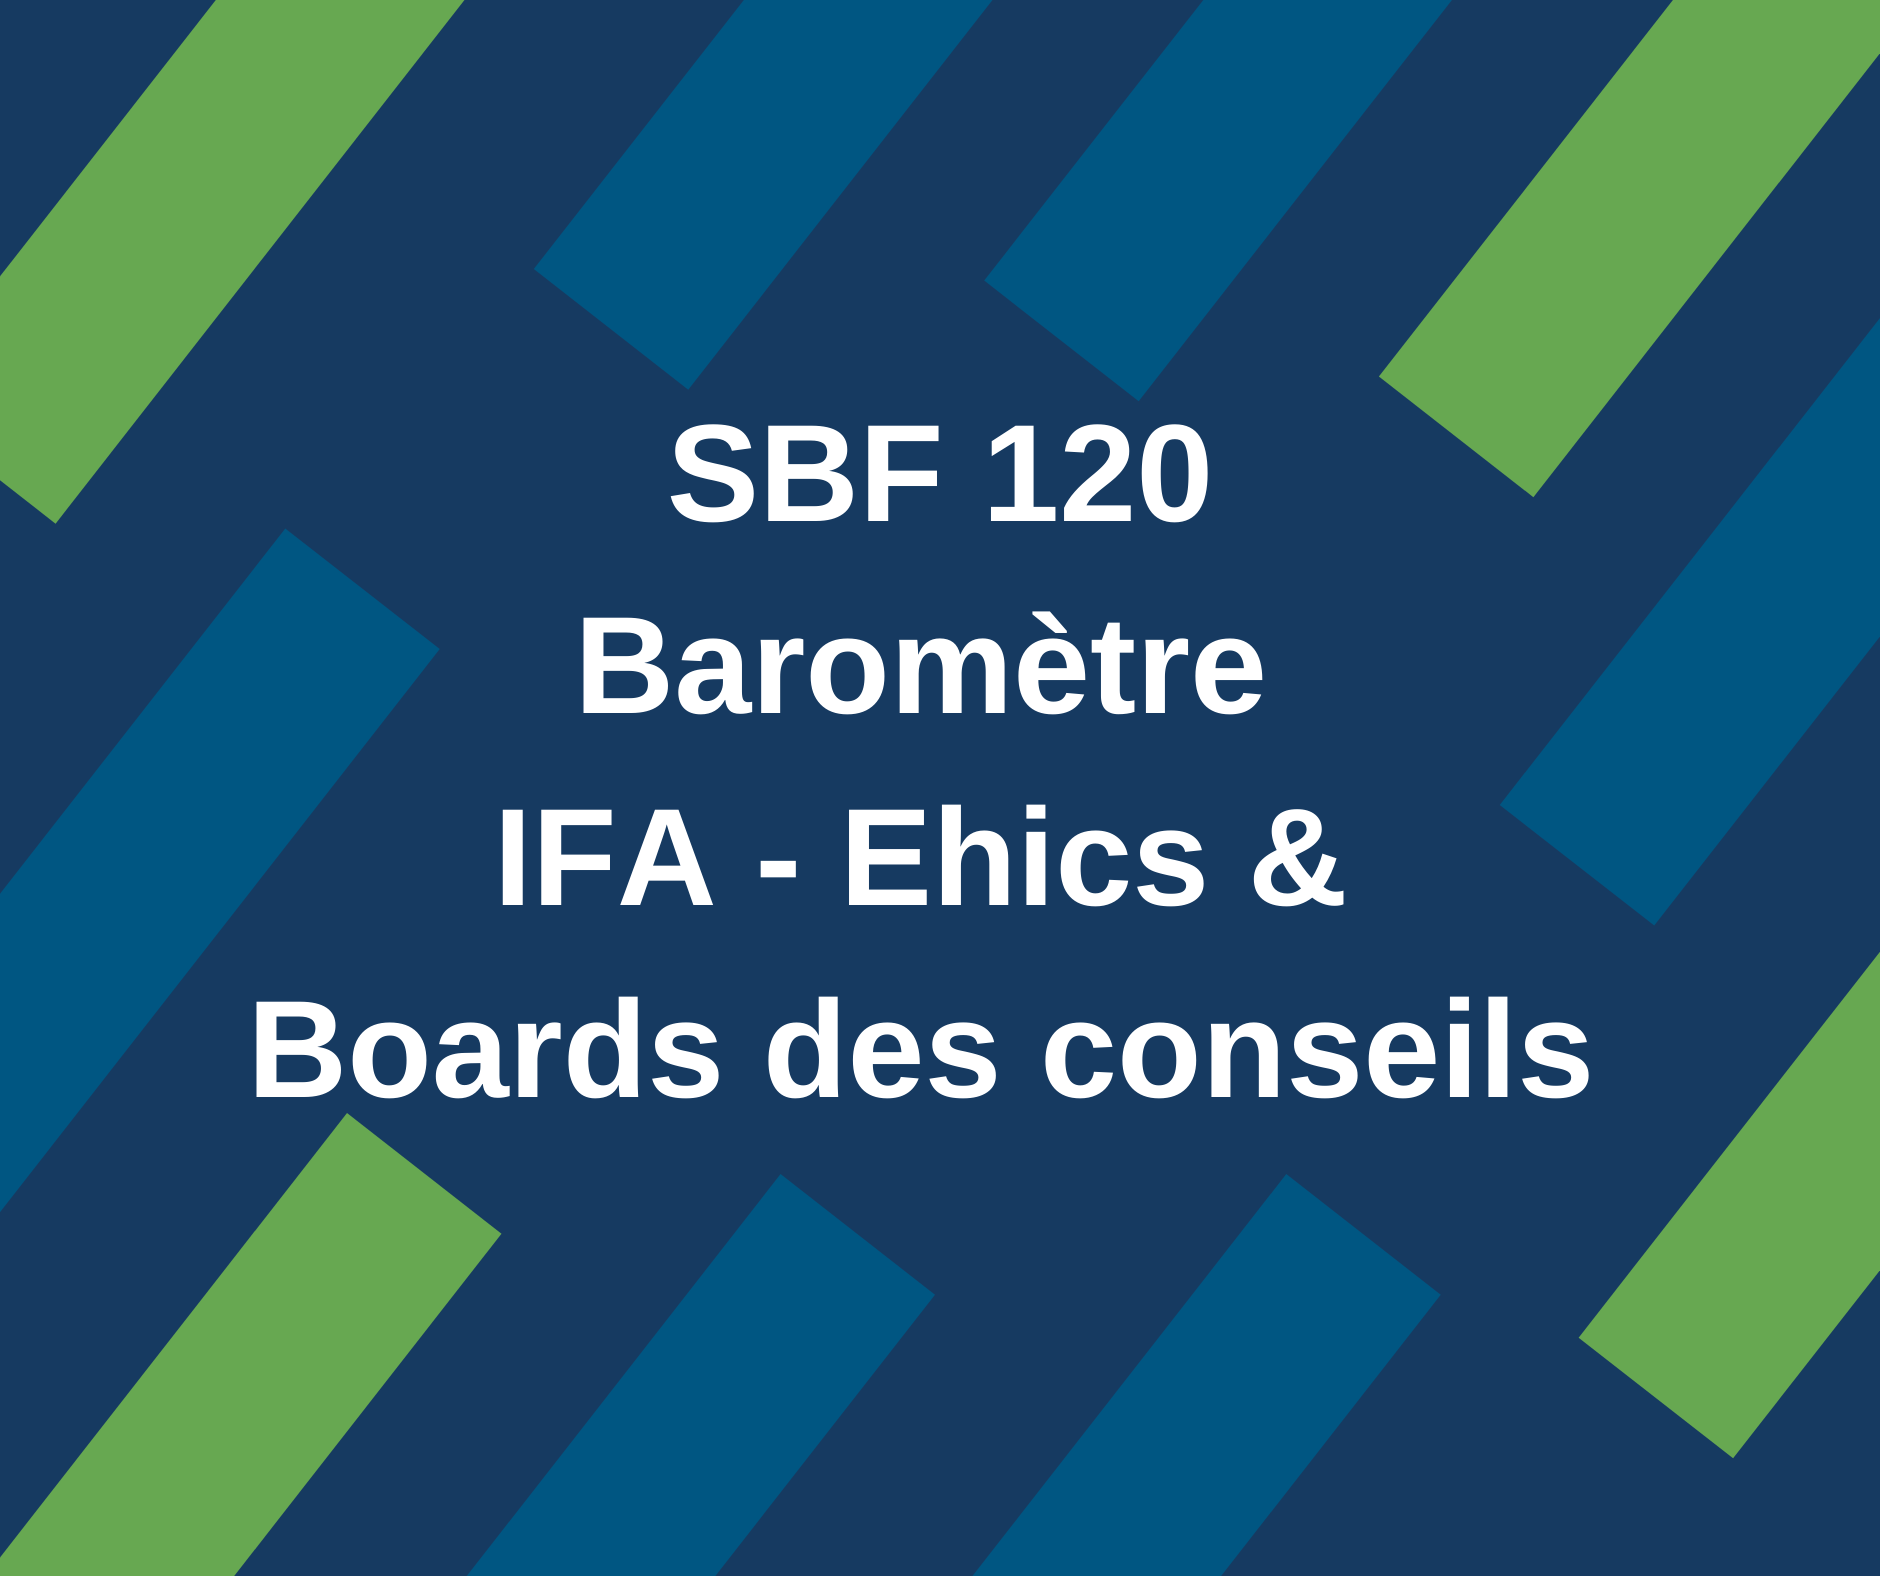 Baromètre IFA-Ethics & Boards SBF 120 - Post-AG 2021